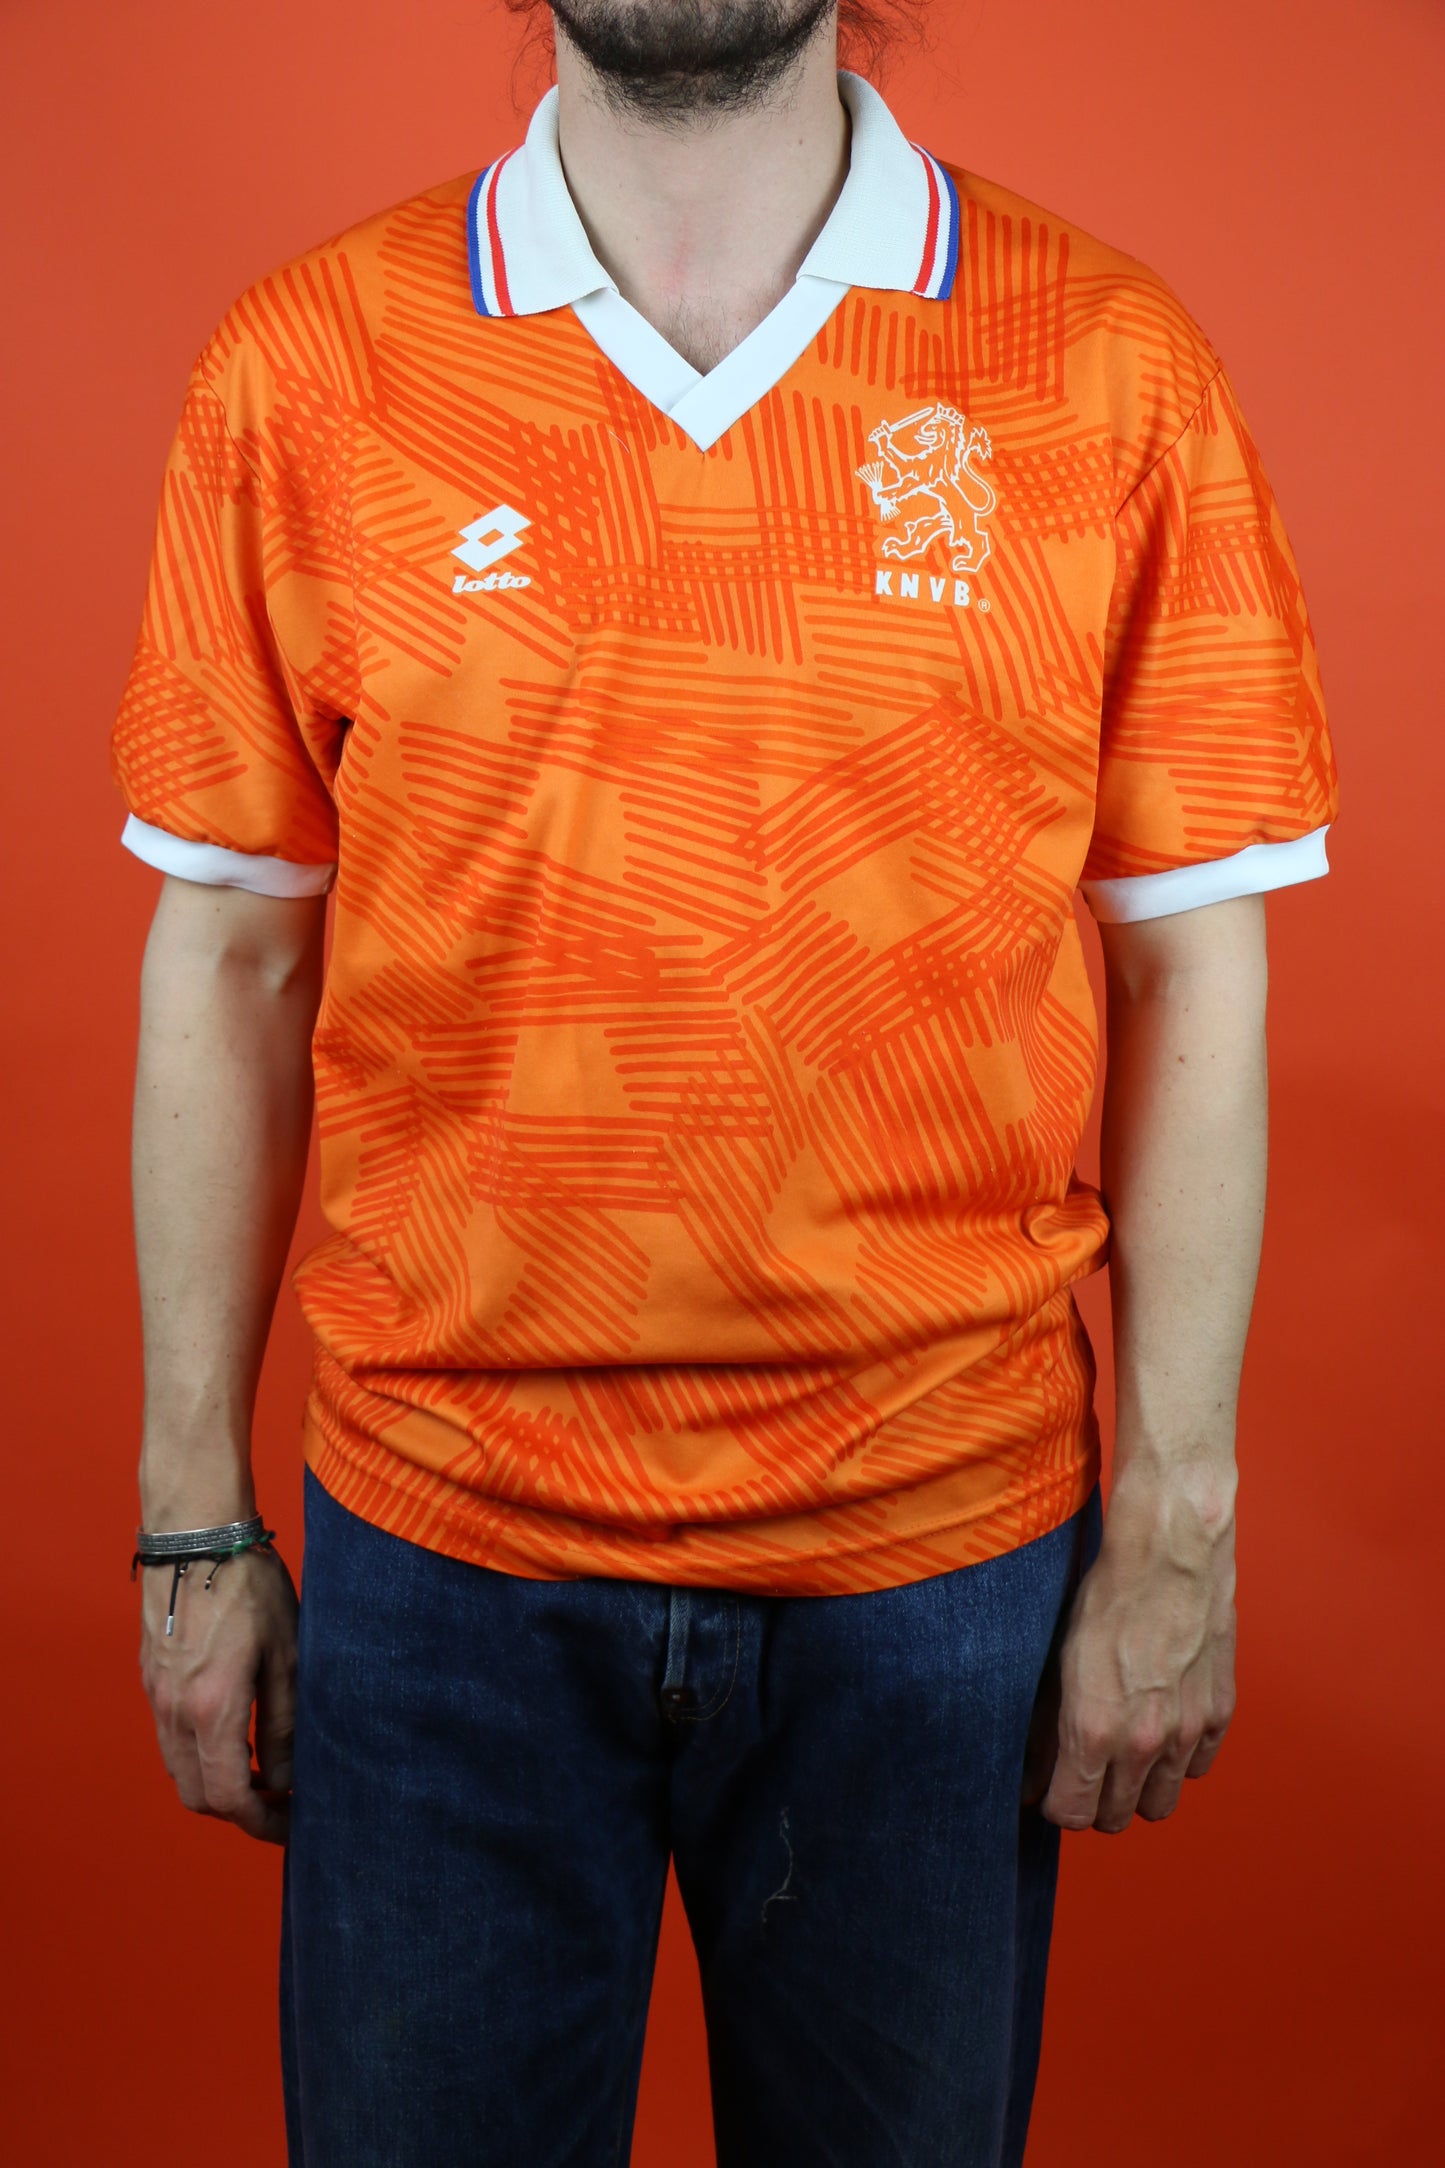 Dutch National Team Jersey 1994 - vintage clothing clochard92.com